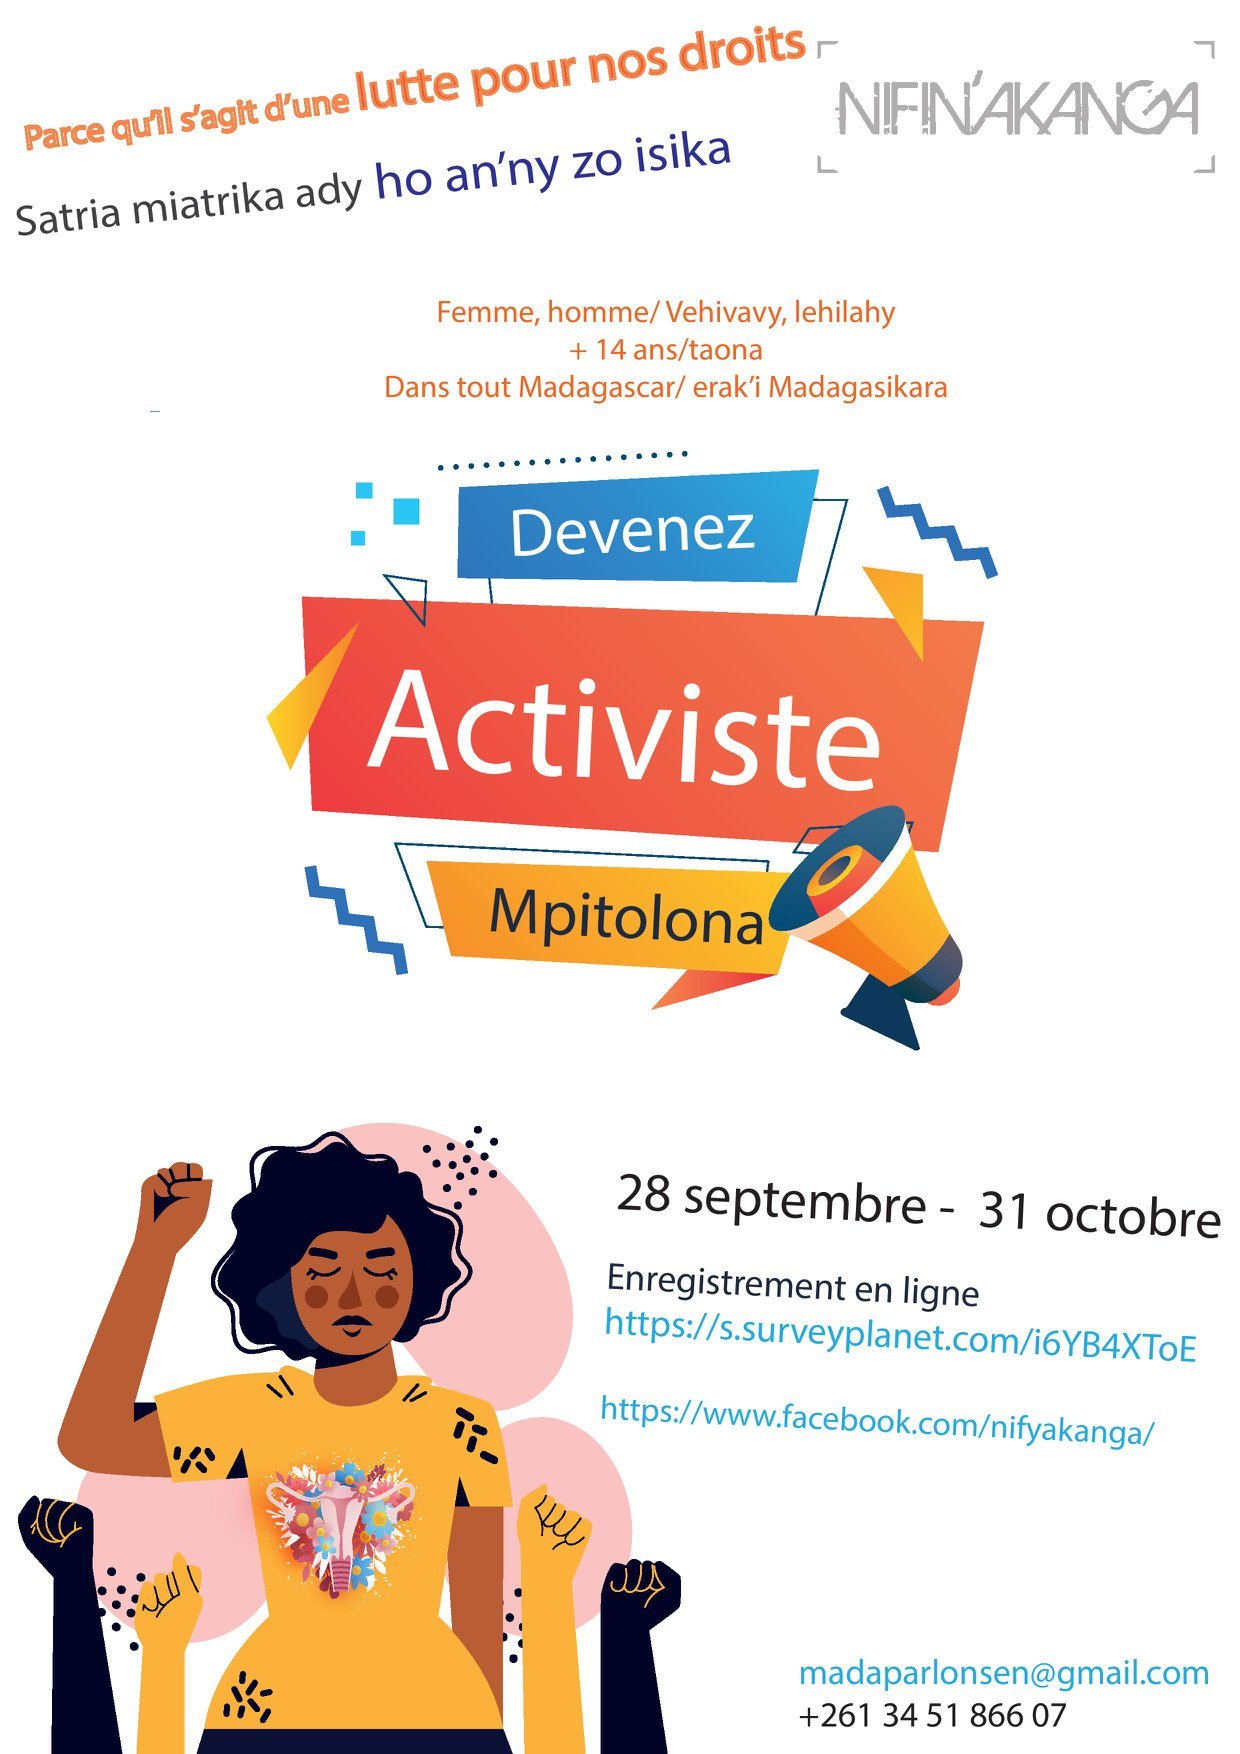 Become an Activist (mpitolona)